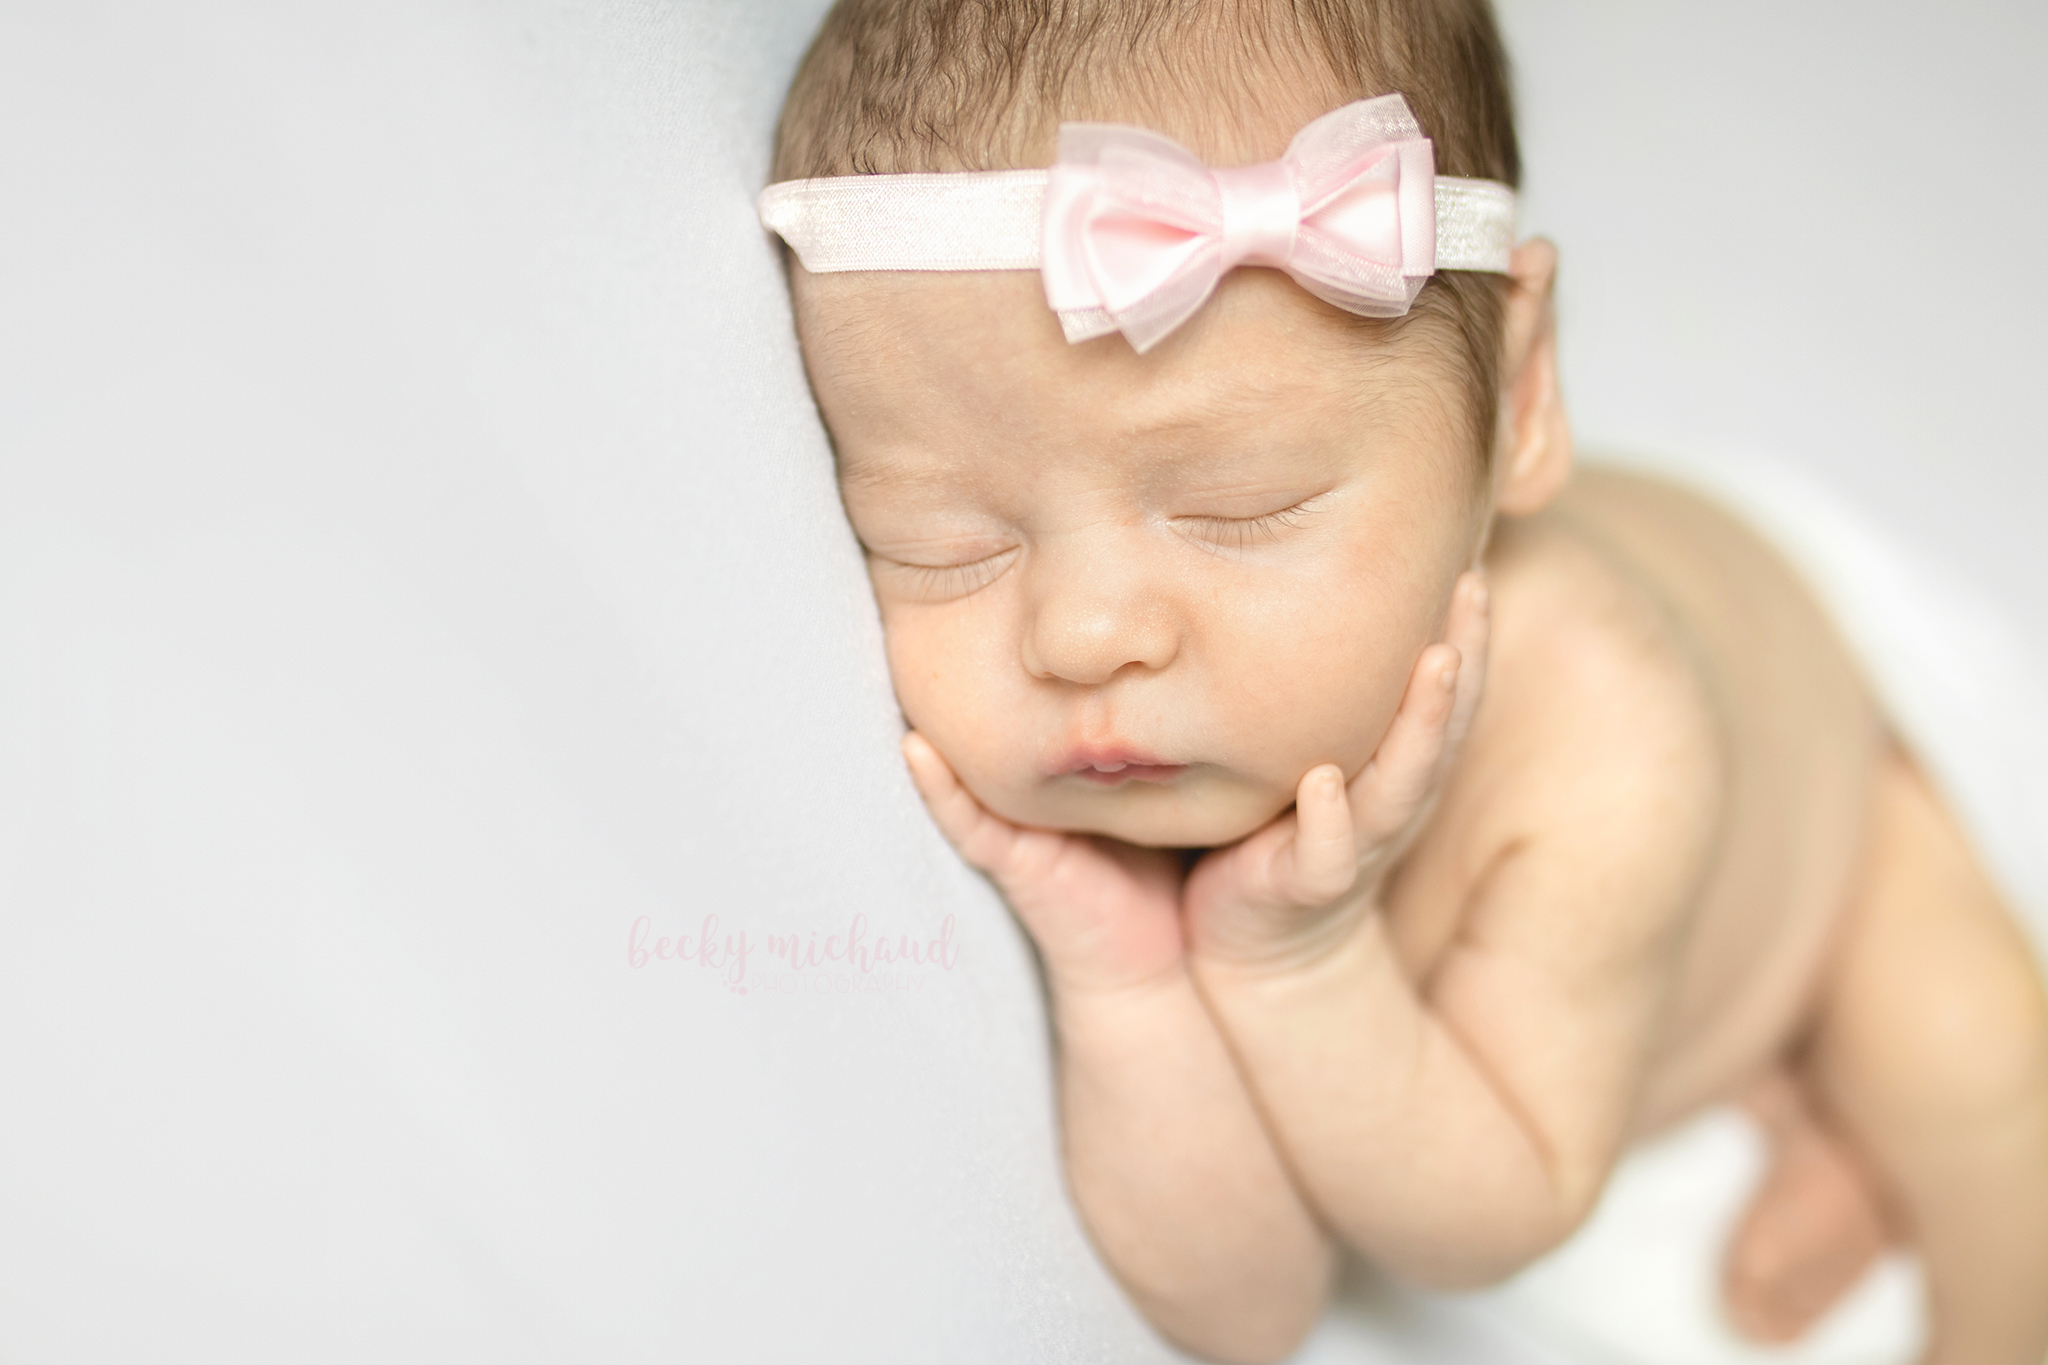 Becky Michaud Photography - Fort Collins -  Newborn Photographer